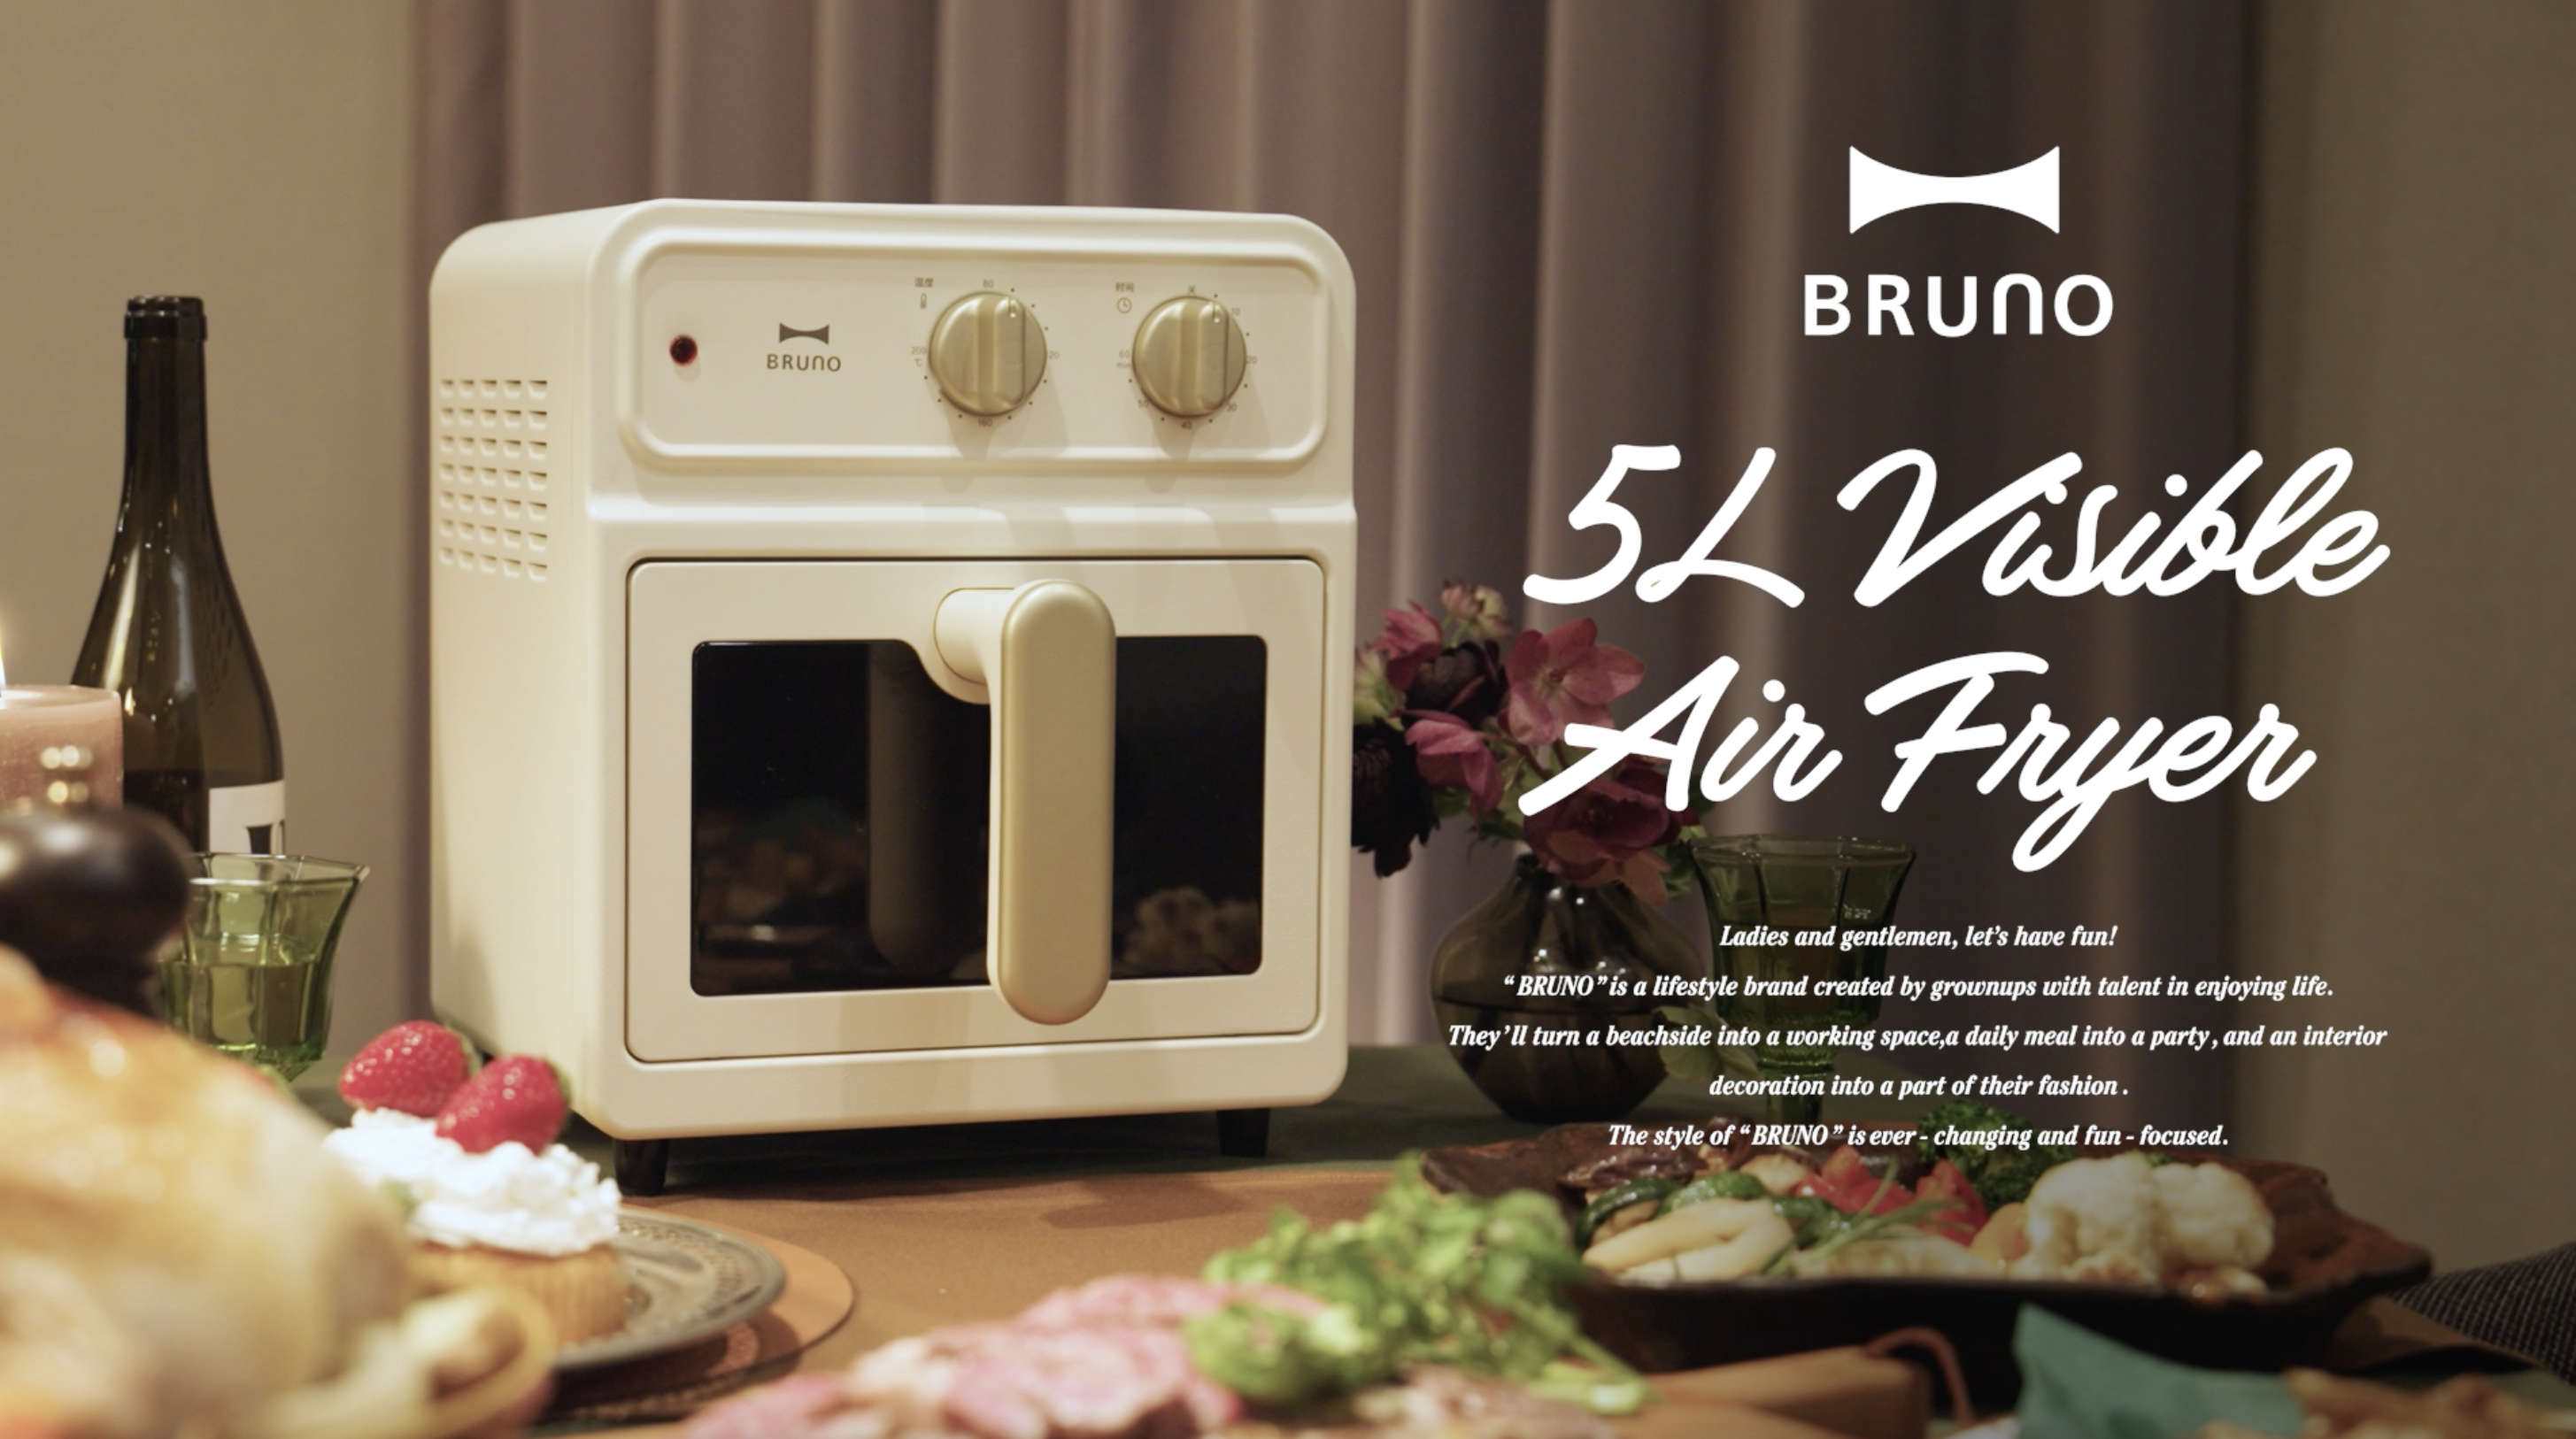 BRUNO 中国版新商品PR映像 5L Visible Air Fryer